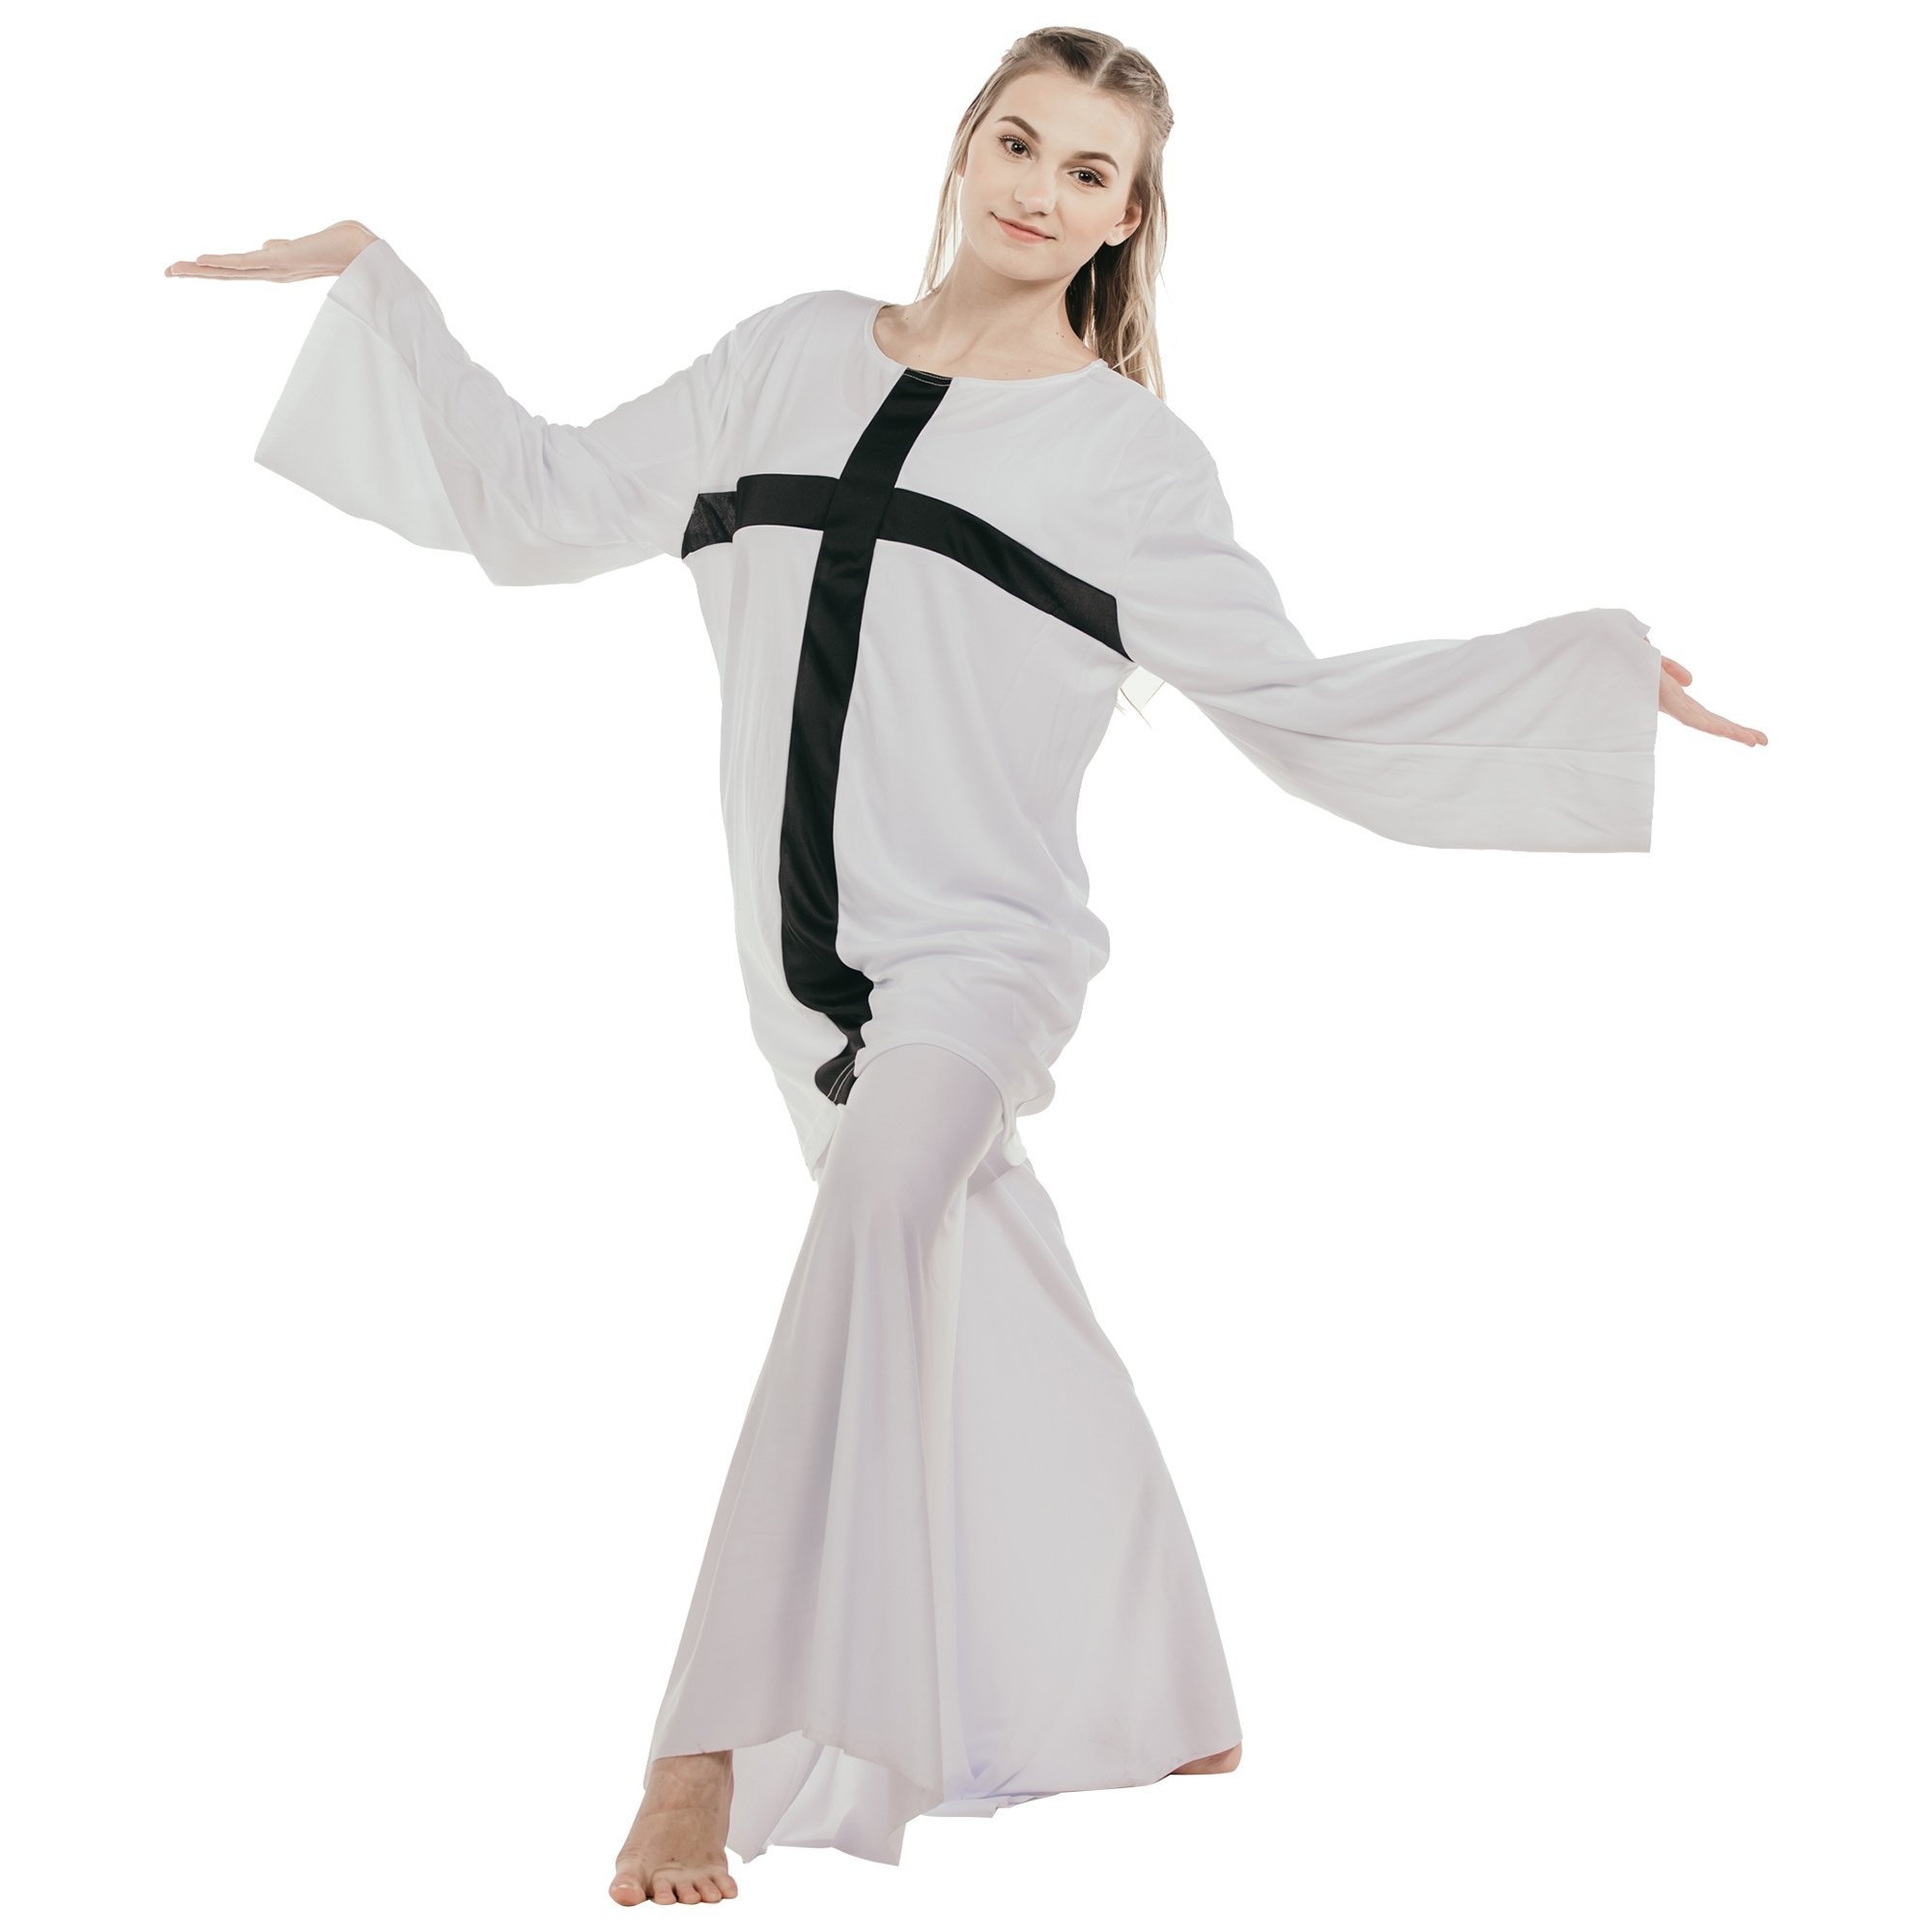 Danzcue Praise Dance Cross Inspired Tunic - Click Image to Close